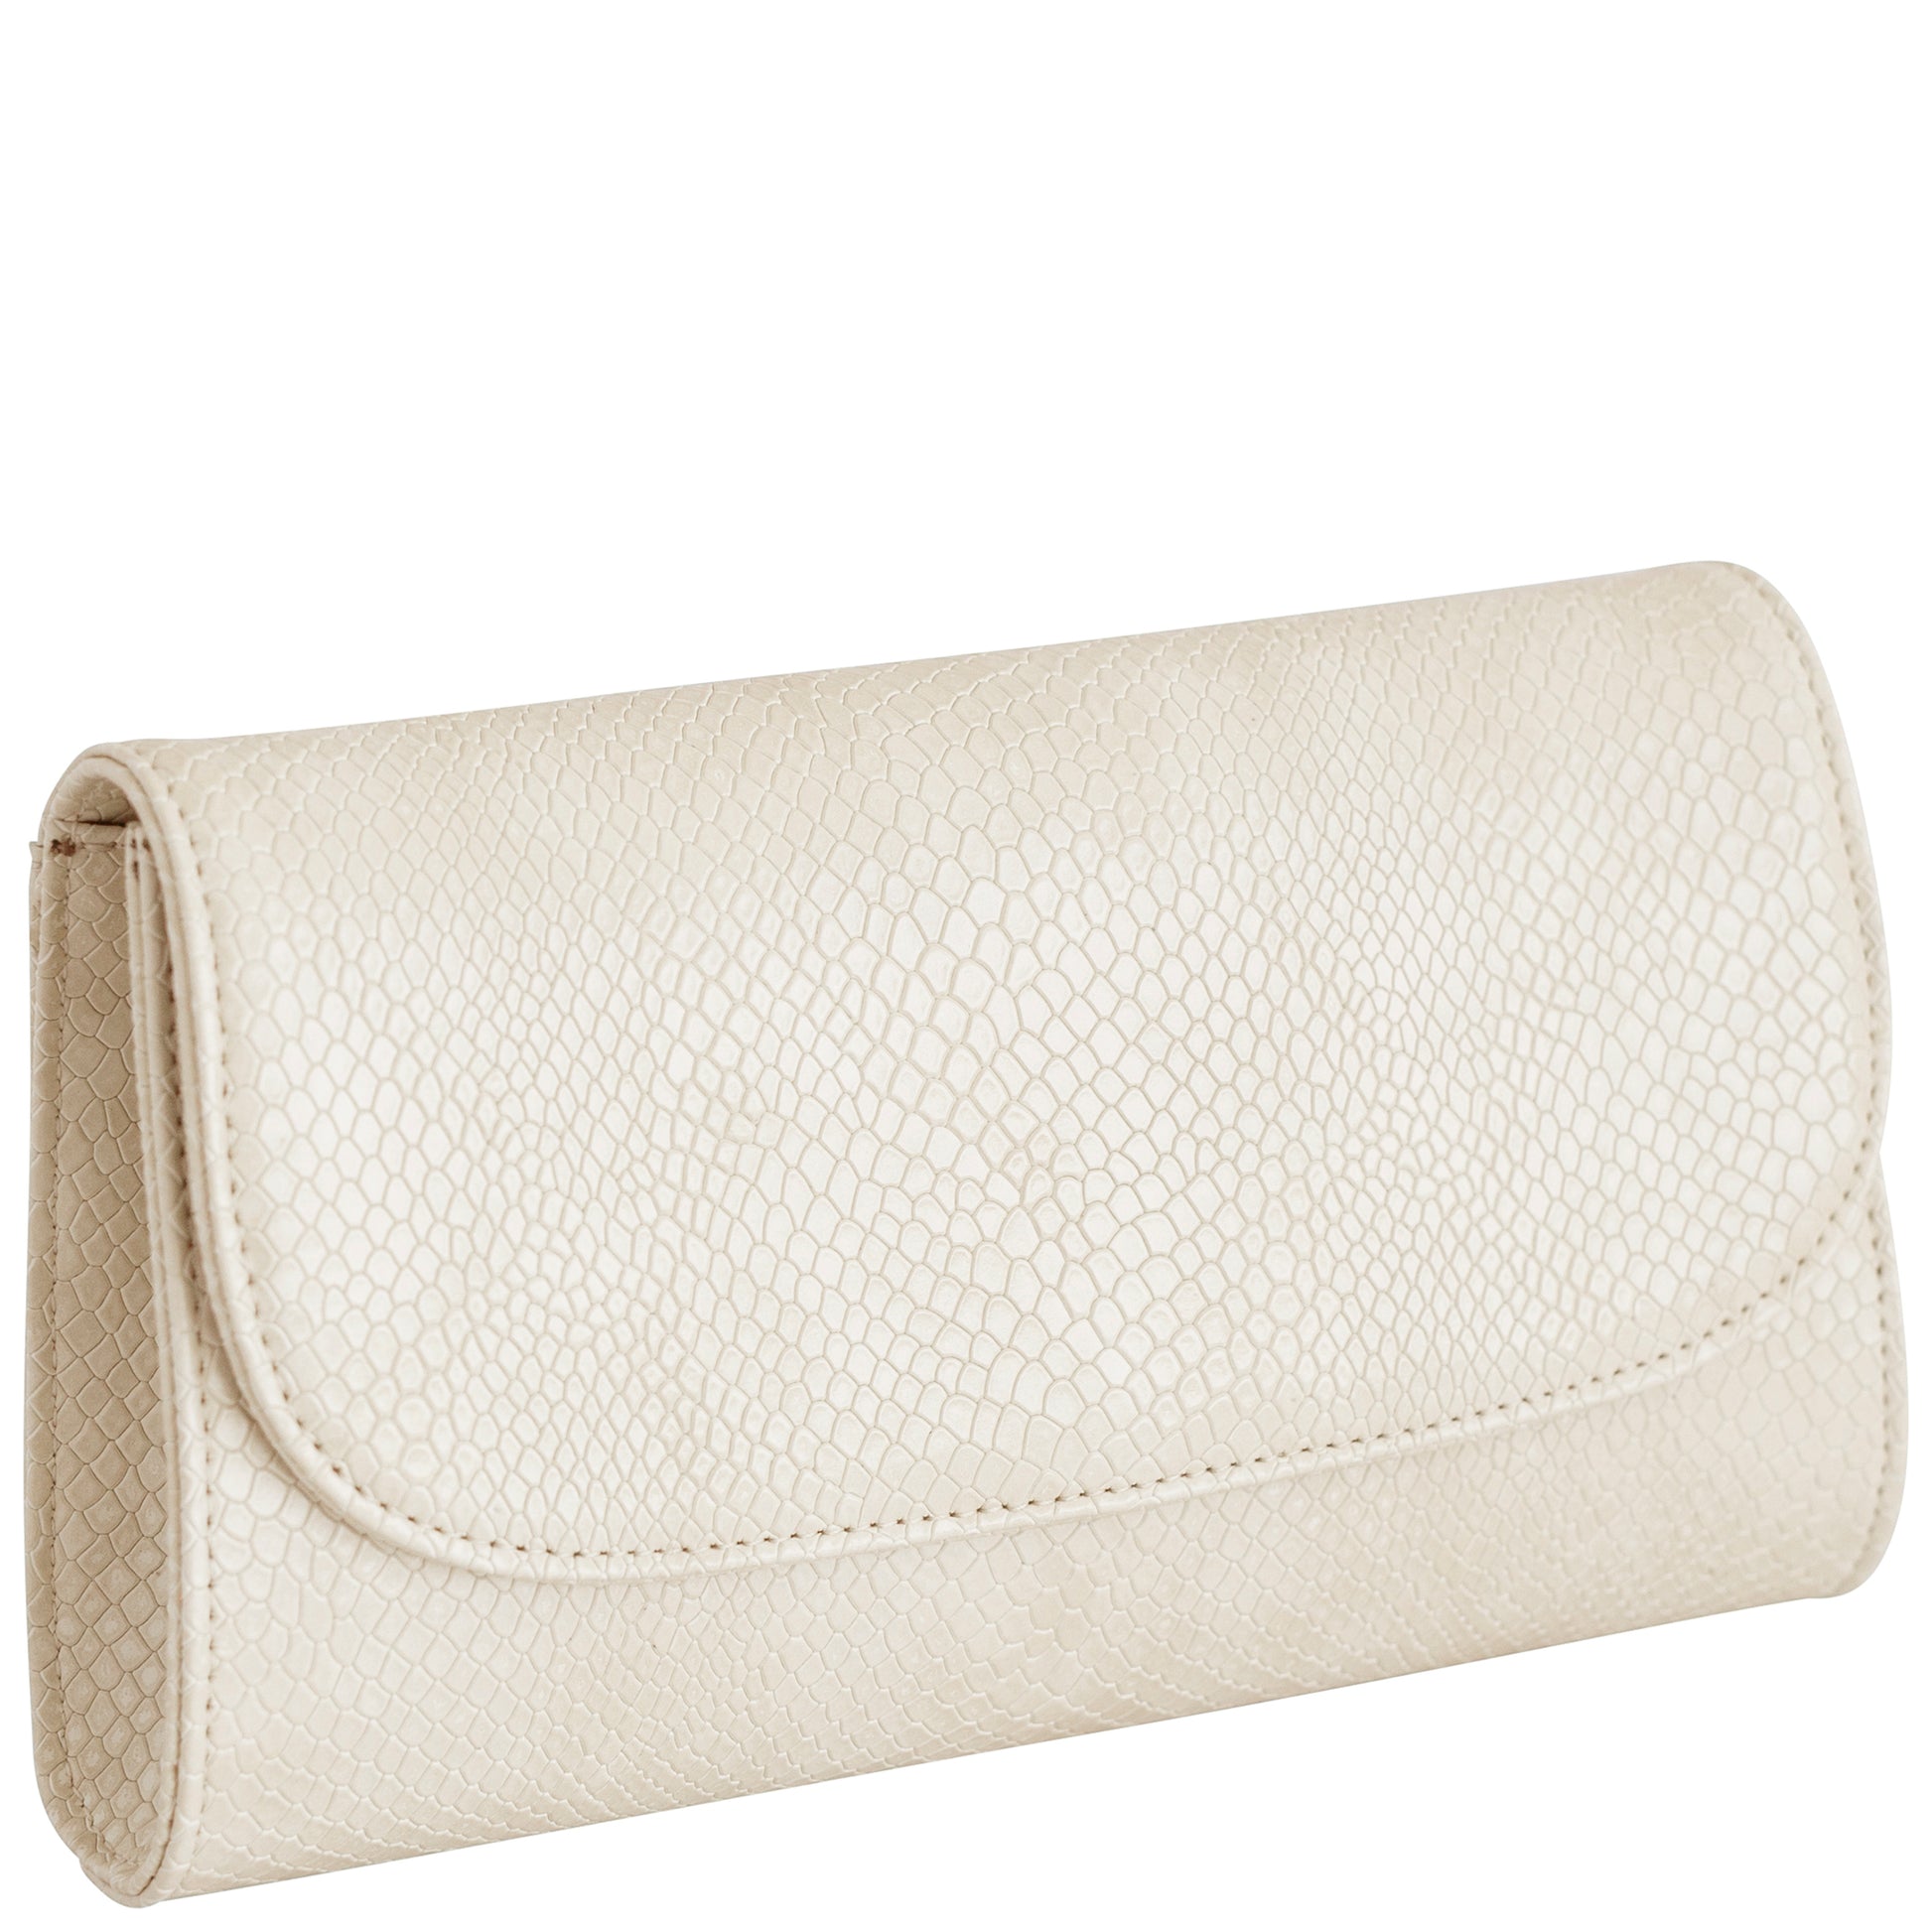 KEYPER® Bag travel purse. 17 Colors. Leather, Faux Leather, Signature, Clear